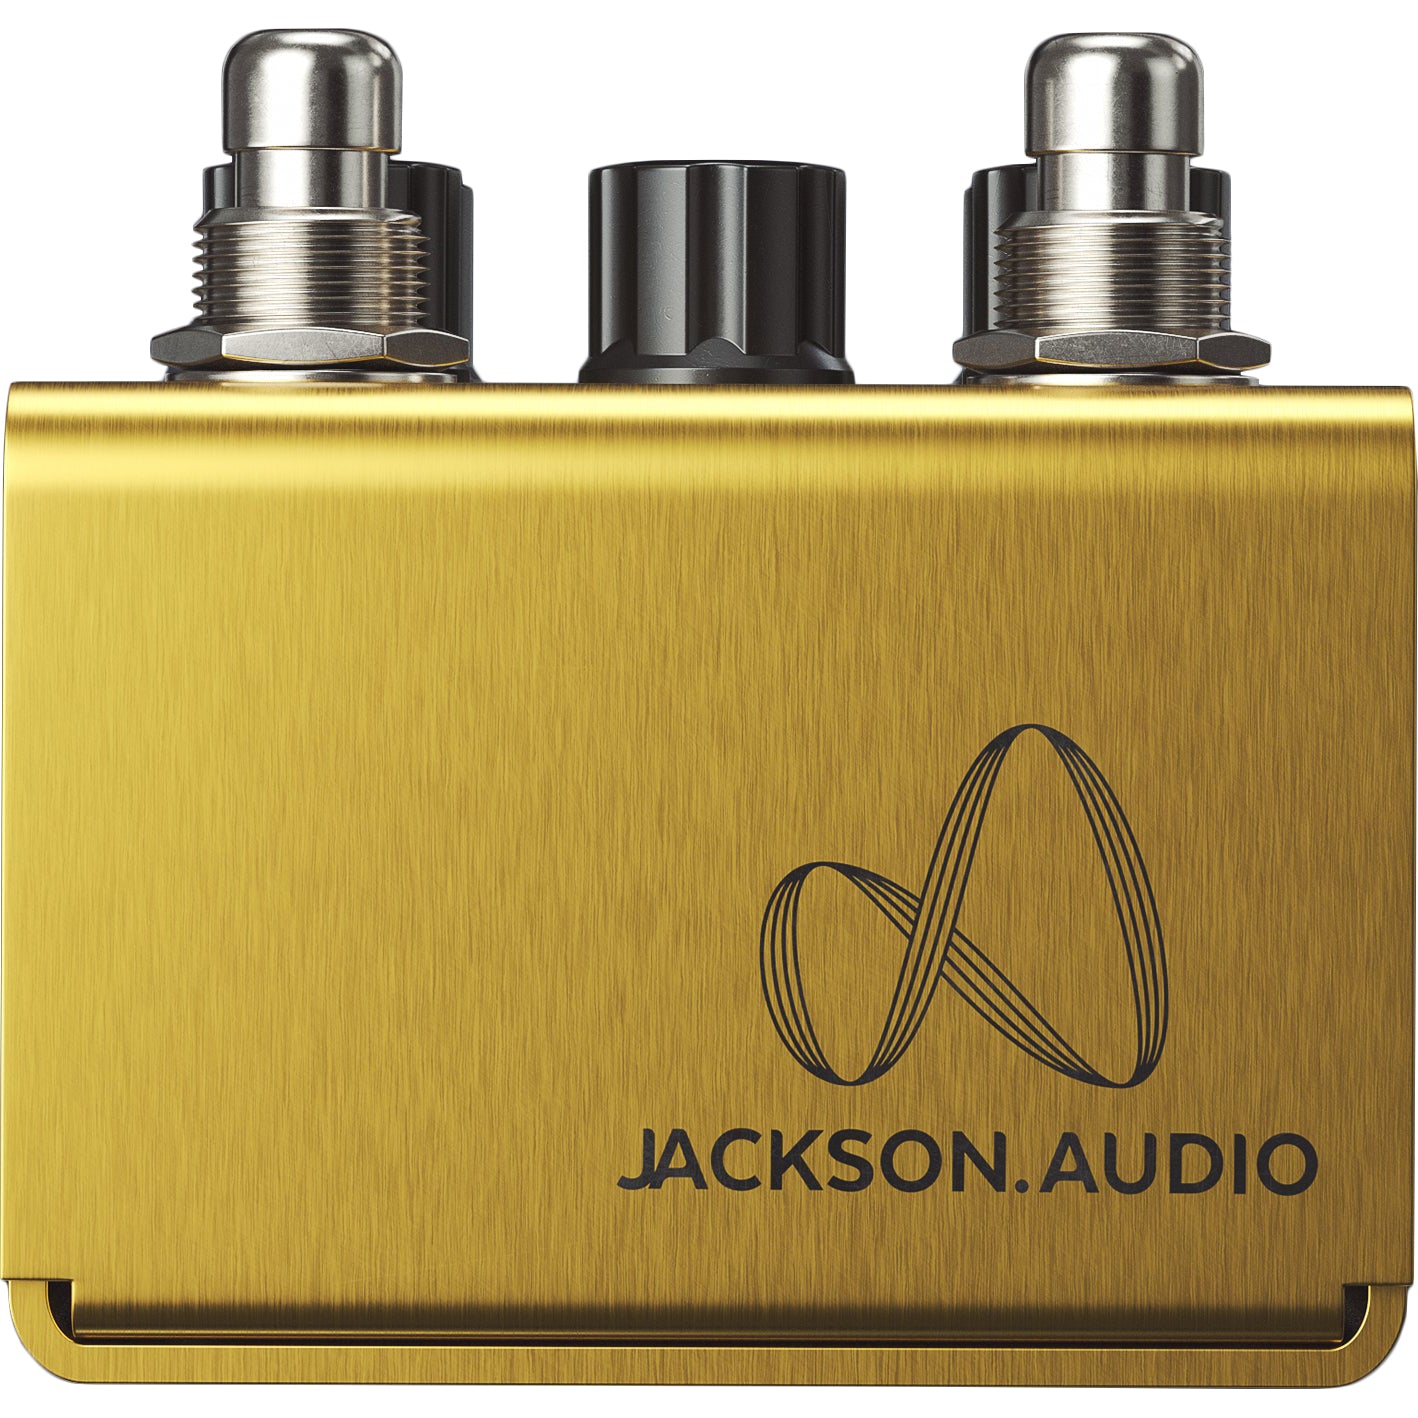 Jackson Audio Golden Boy Joey Landreth Transparent Overdrive Pedal